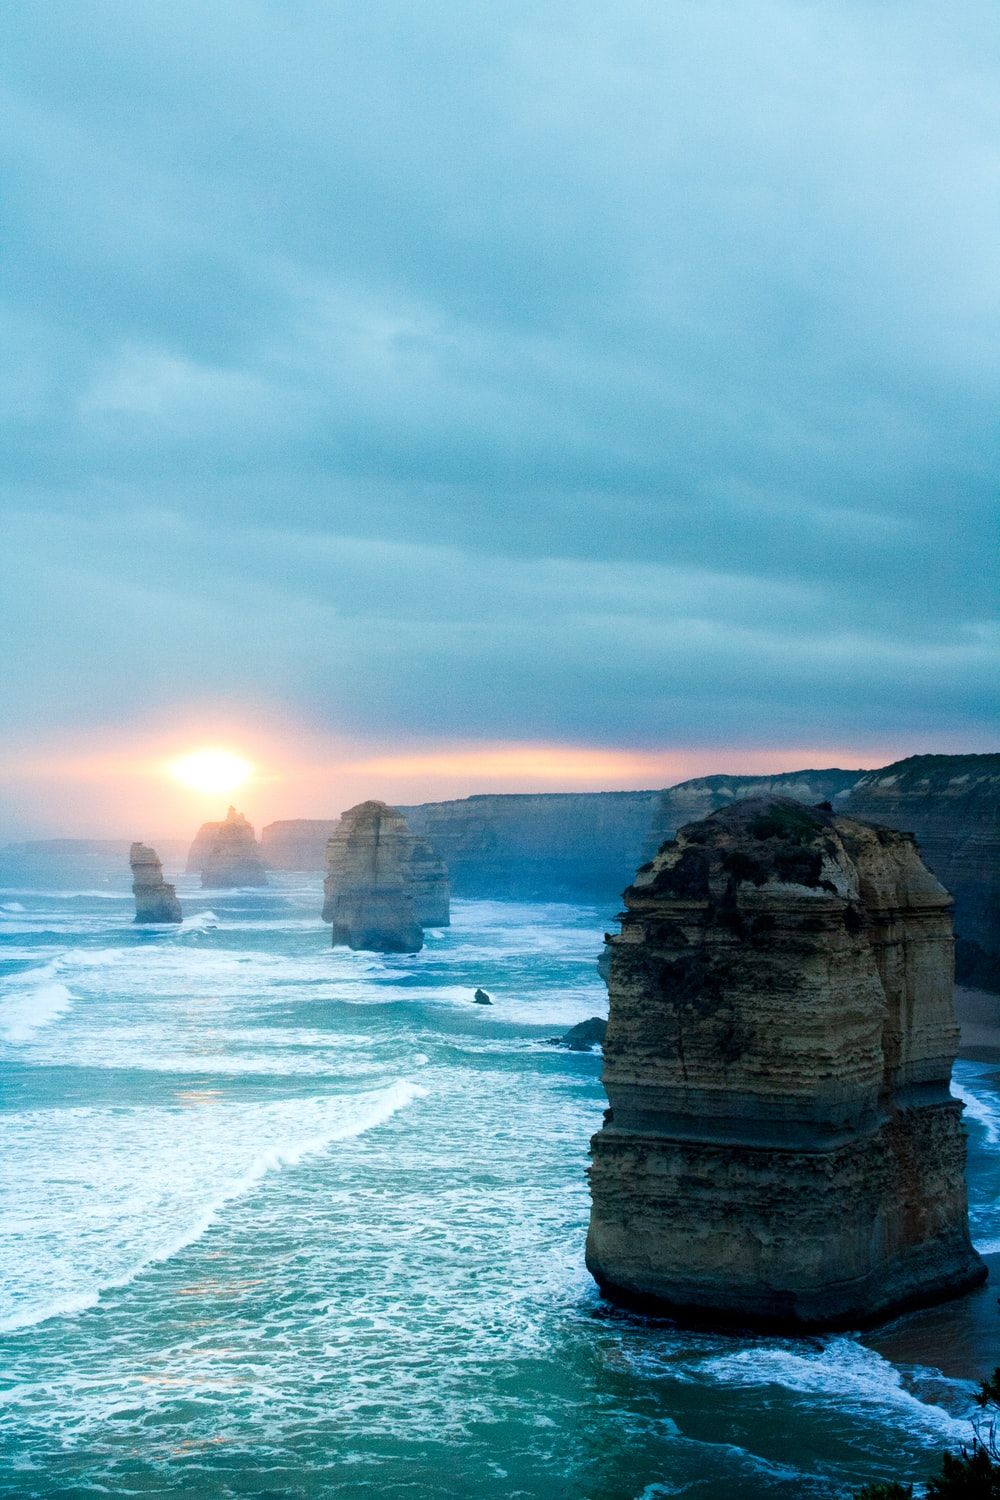 Twelve Apostles, Australia Picture. Download Free Image